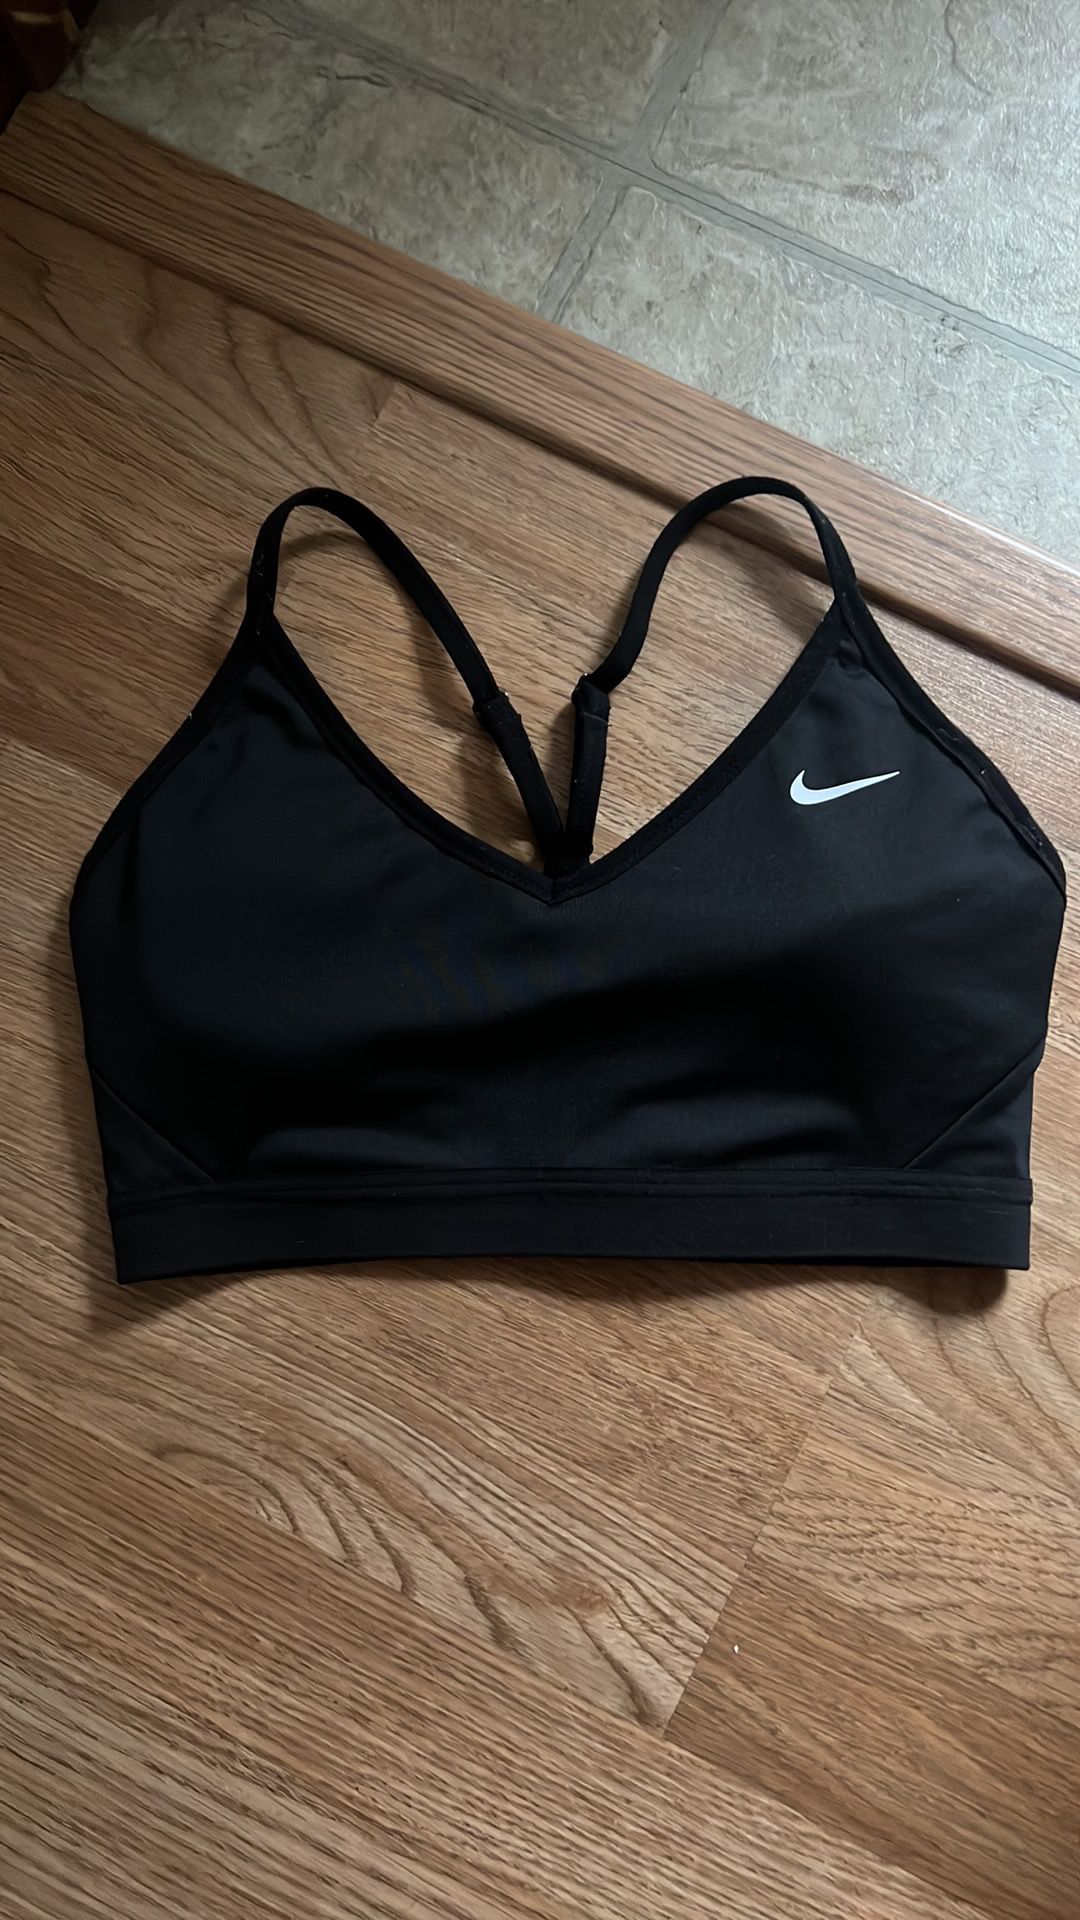 Black Nike Sports Bra - Padded - Size Small